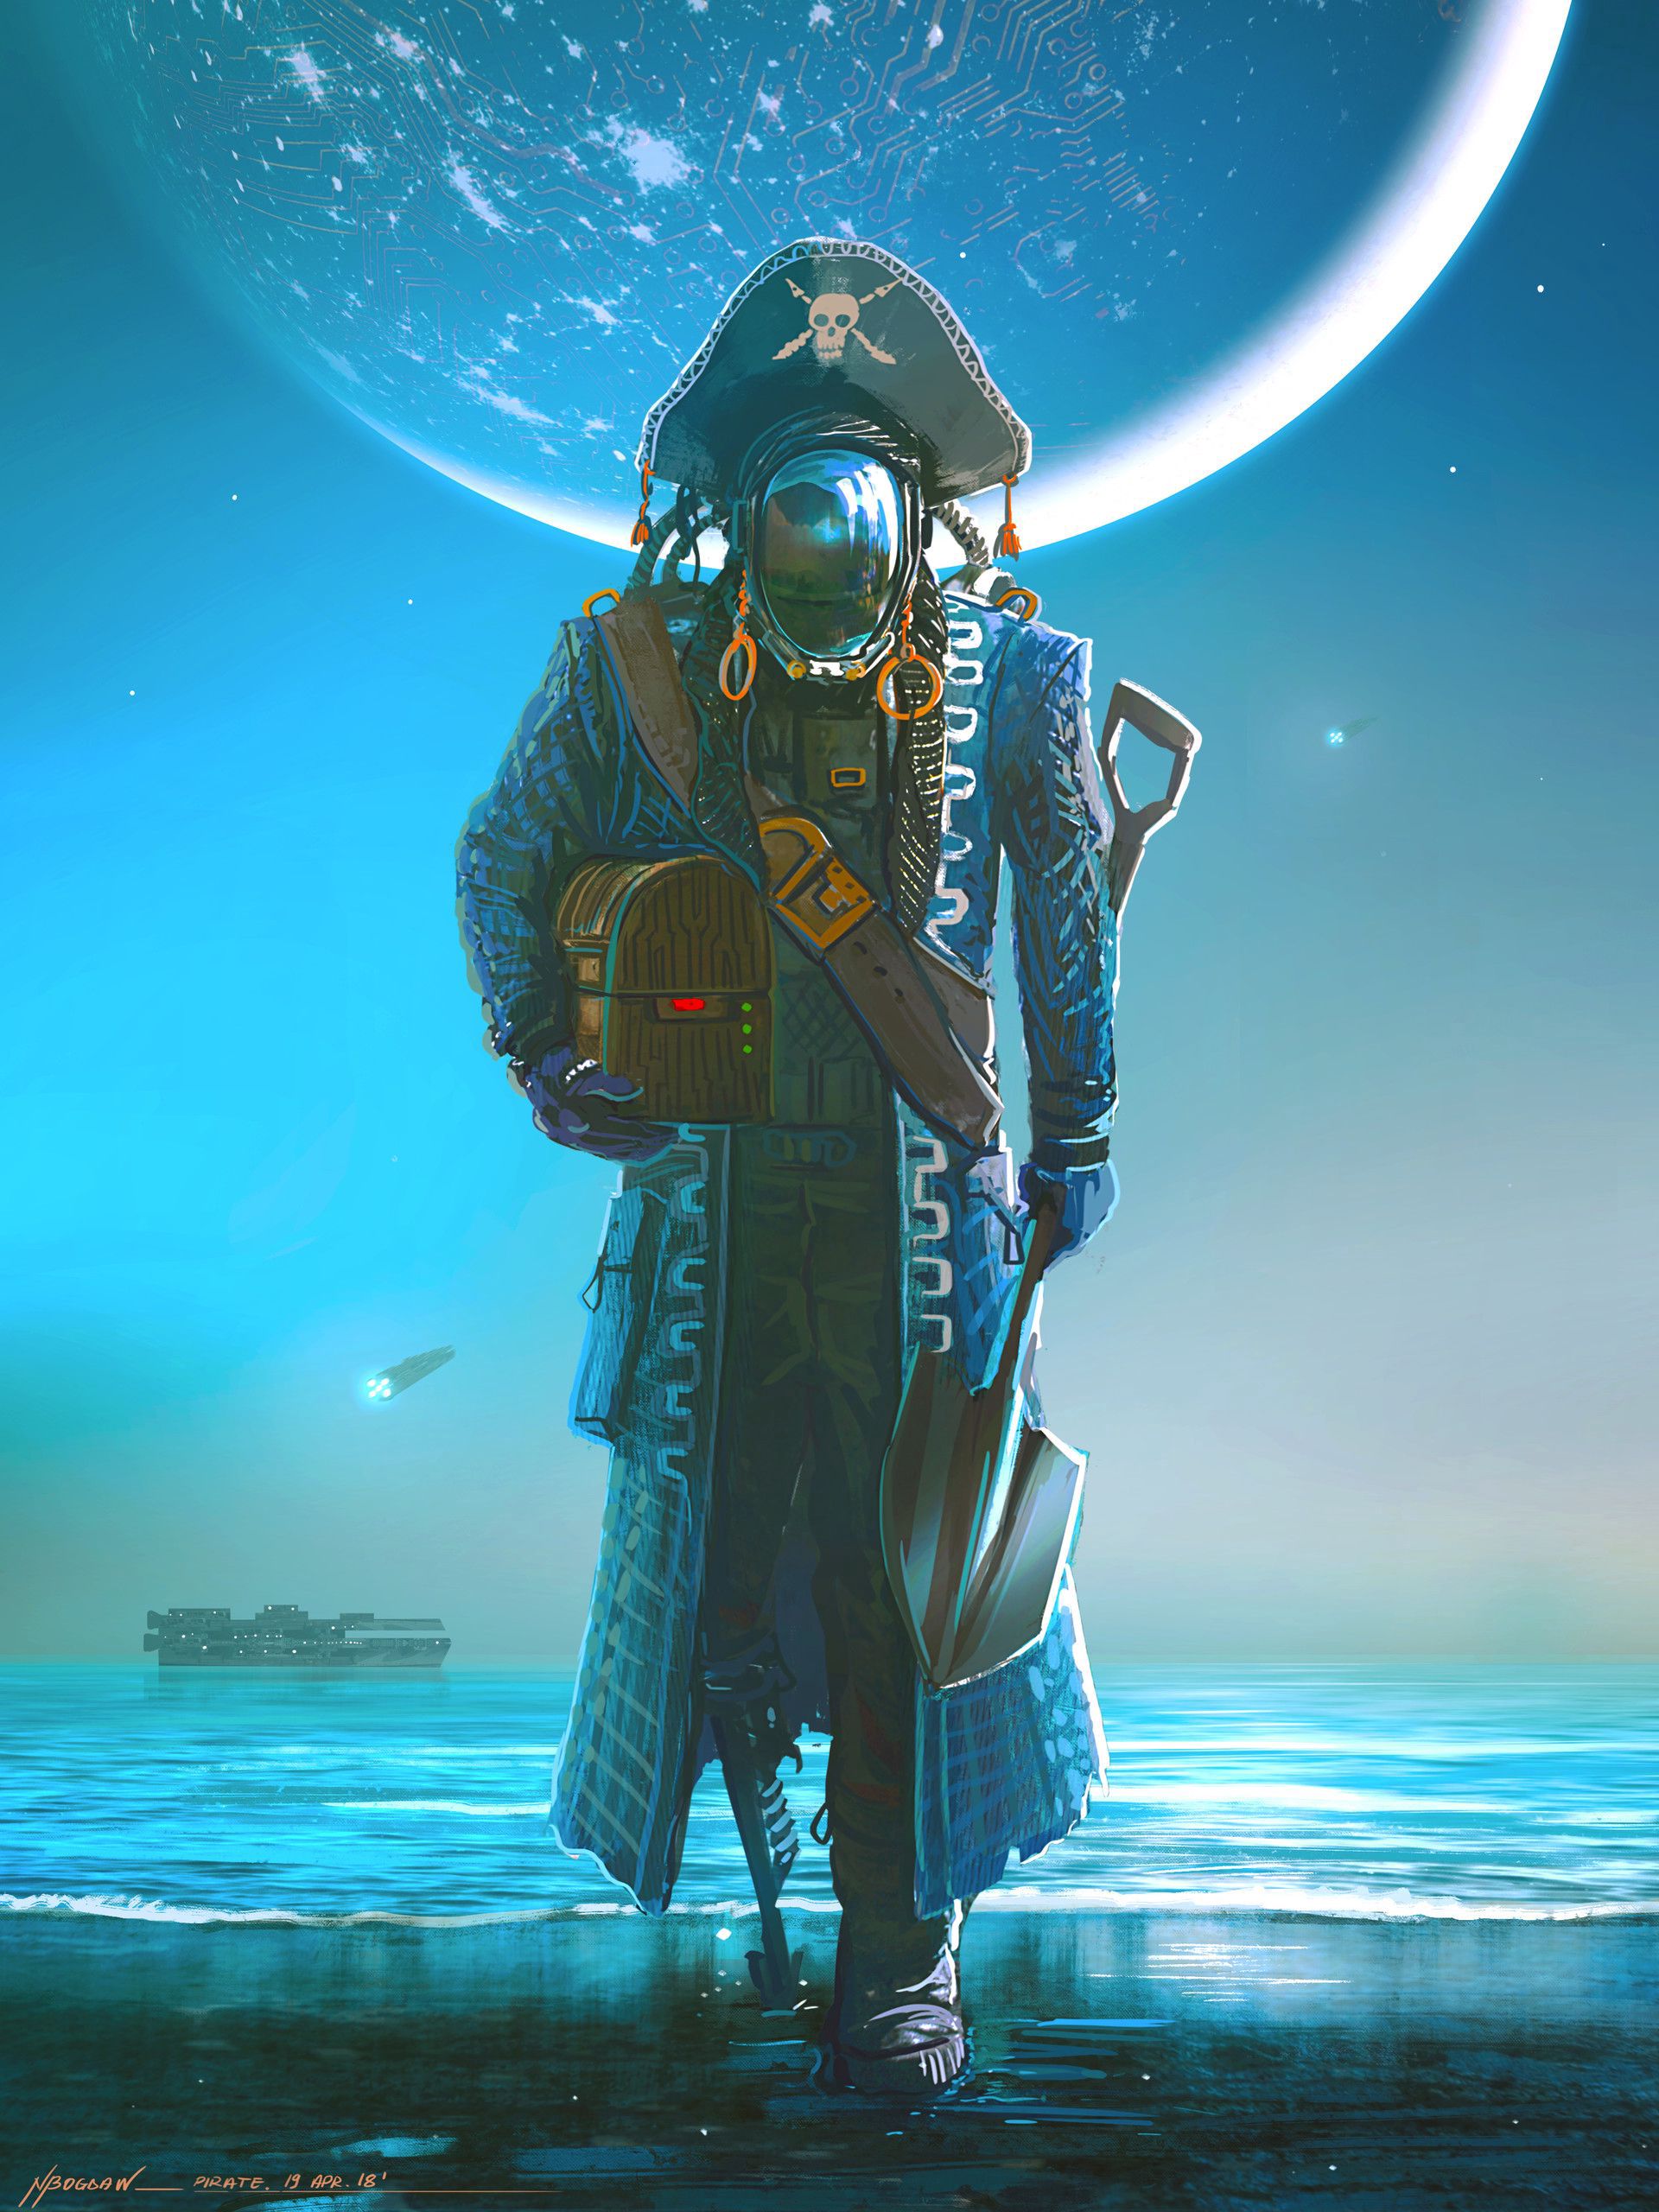 Best Pirate Full HD Wallpaper